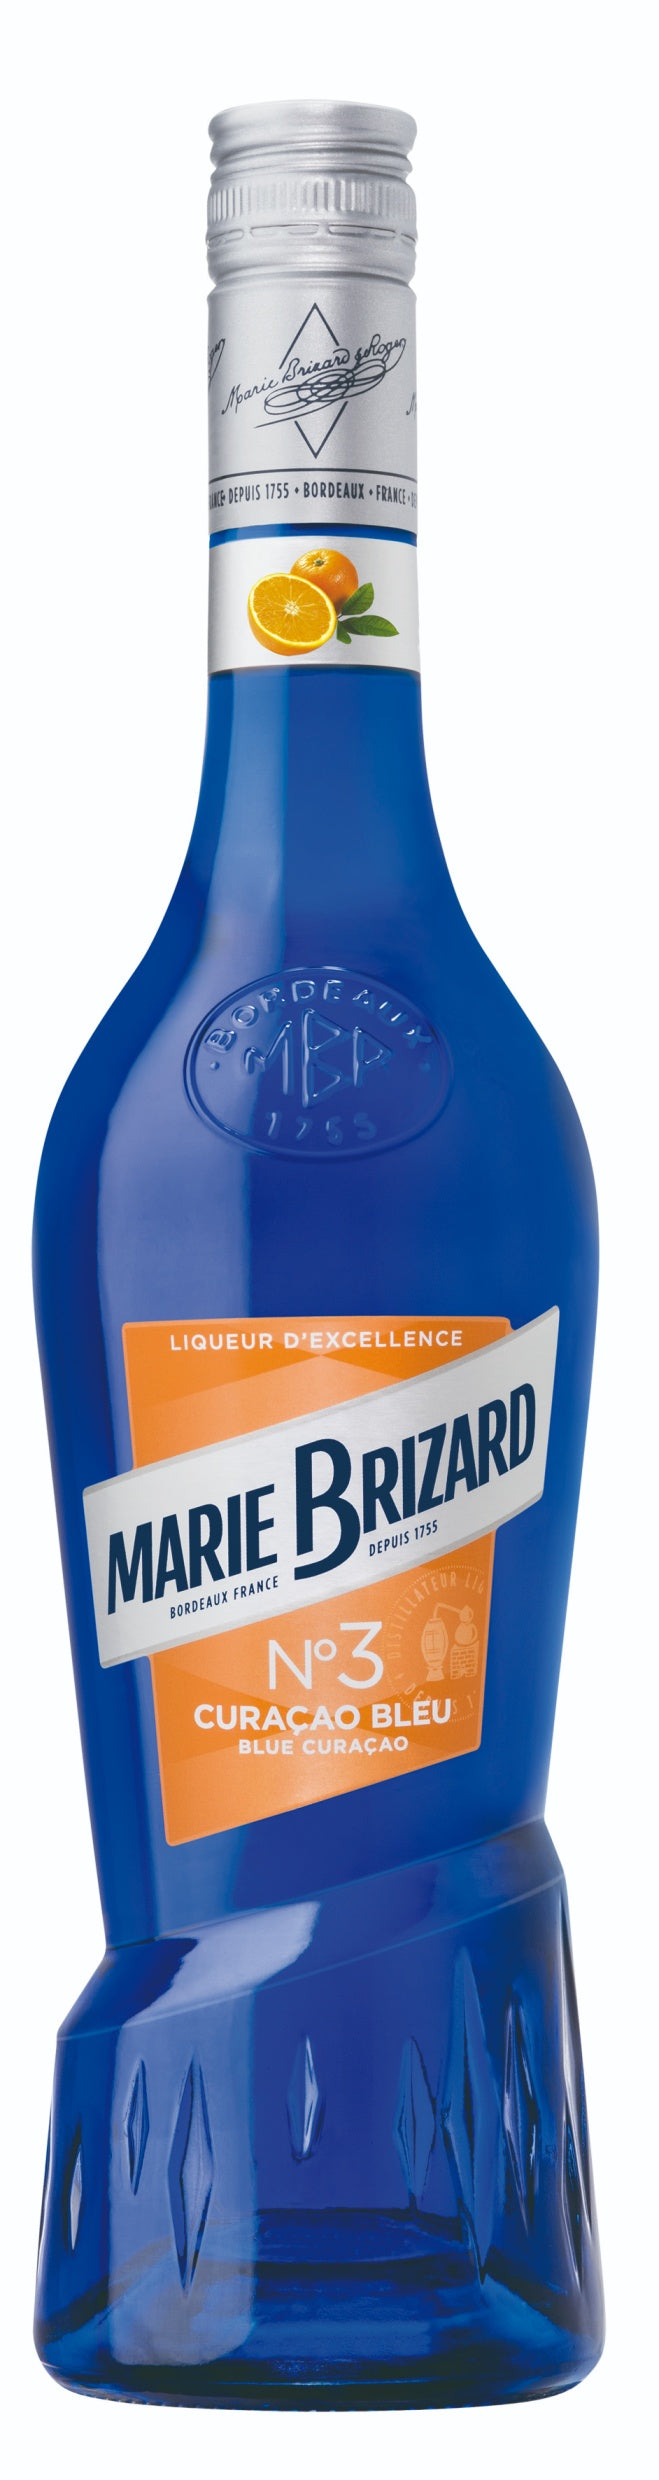 MARIE BRIZARD LIQUEUR CURACAO BLEU 70CL